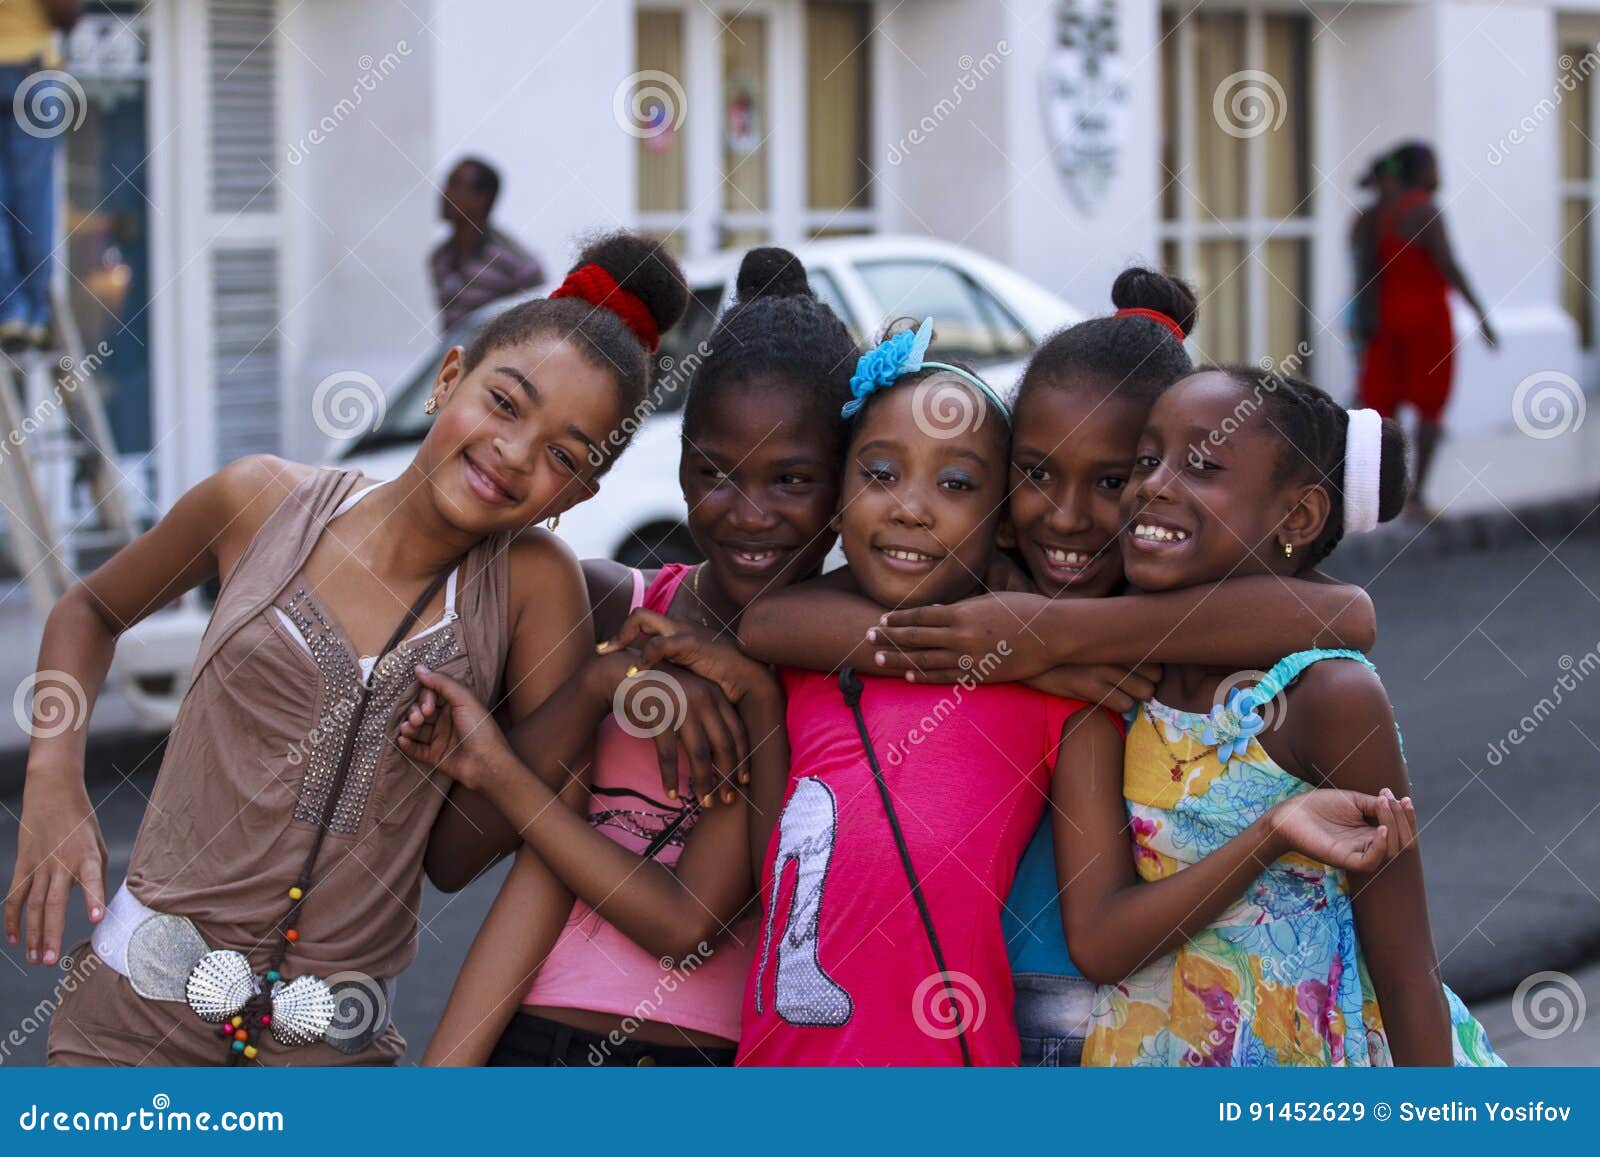 Cuba girls de santiago Cuba Article: